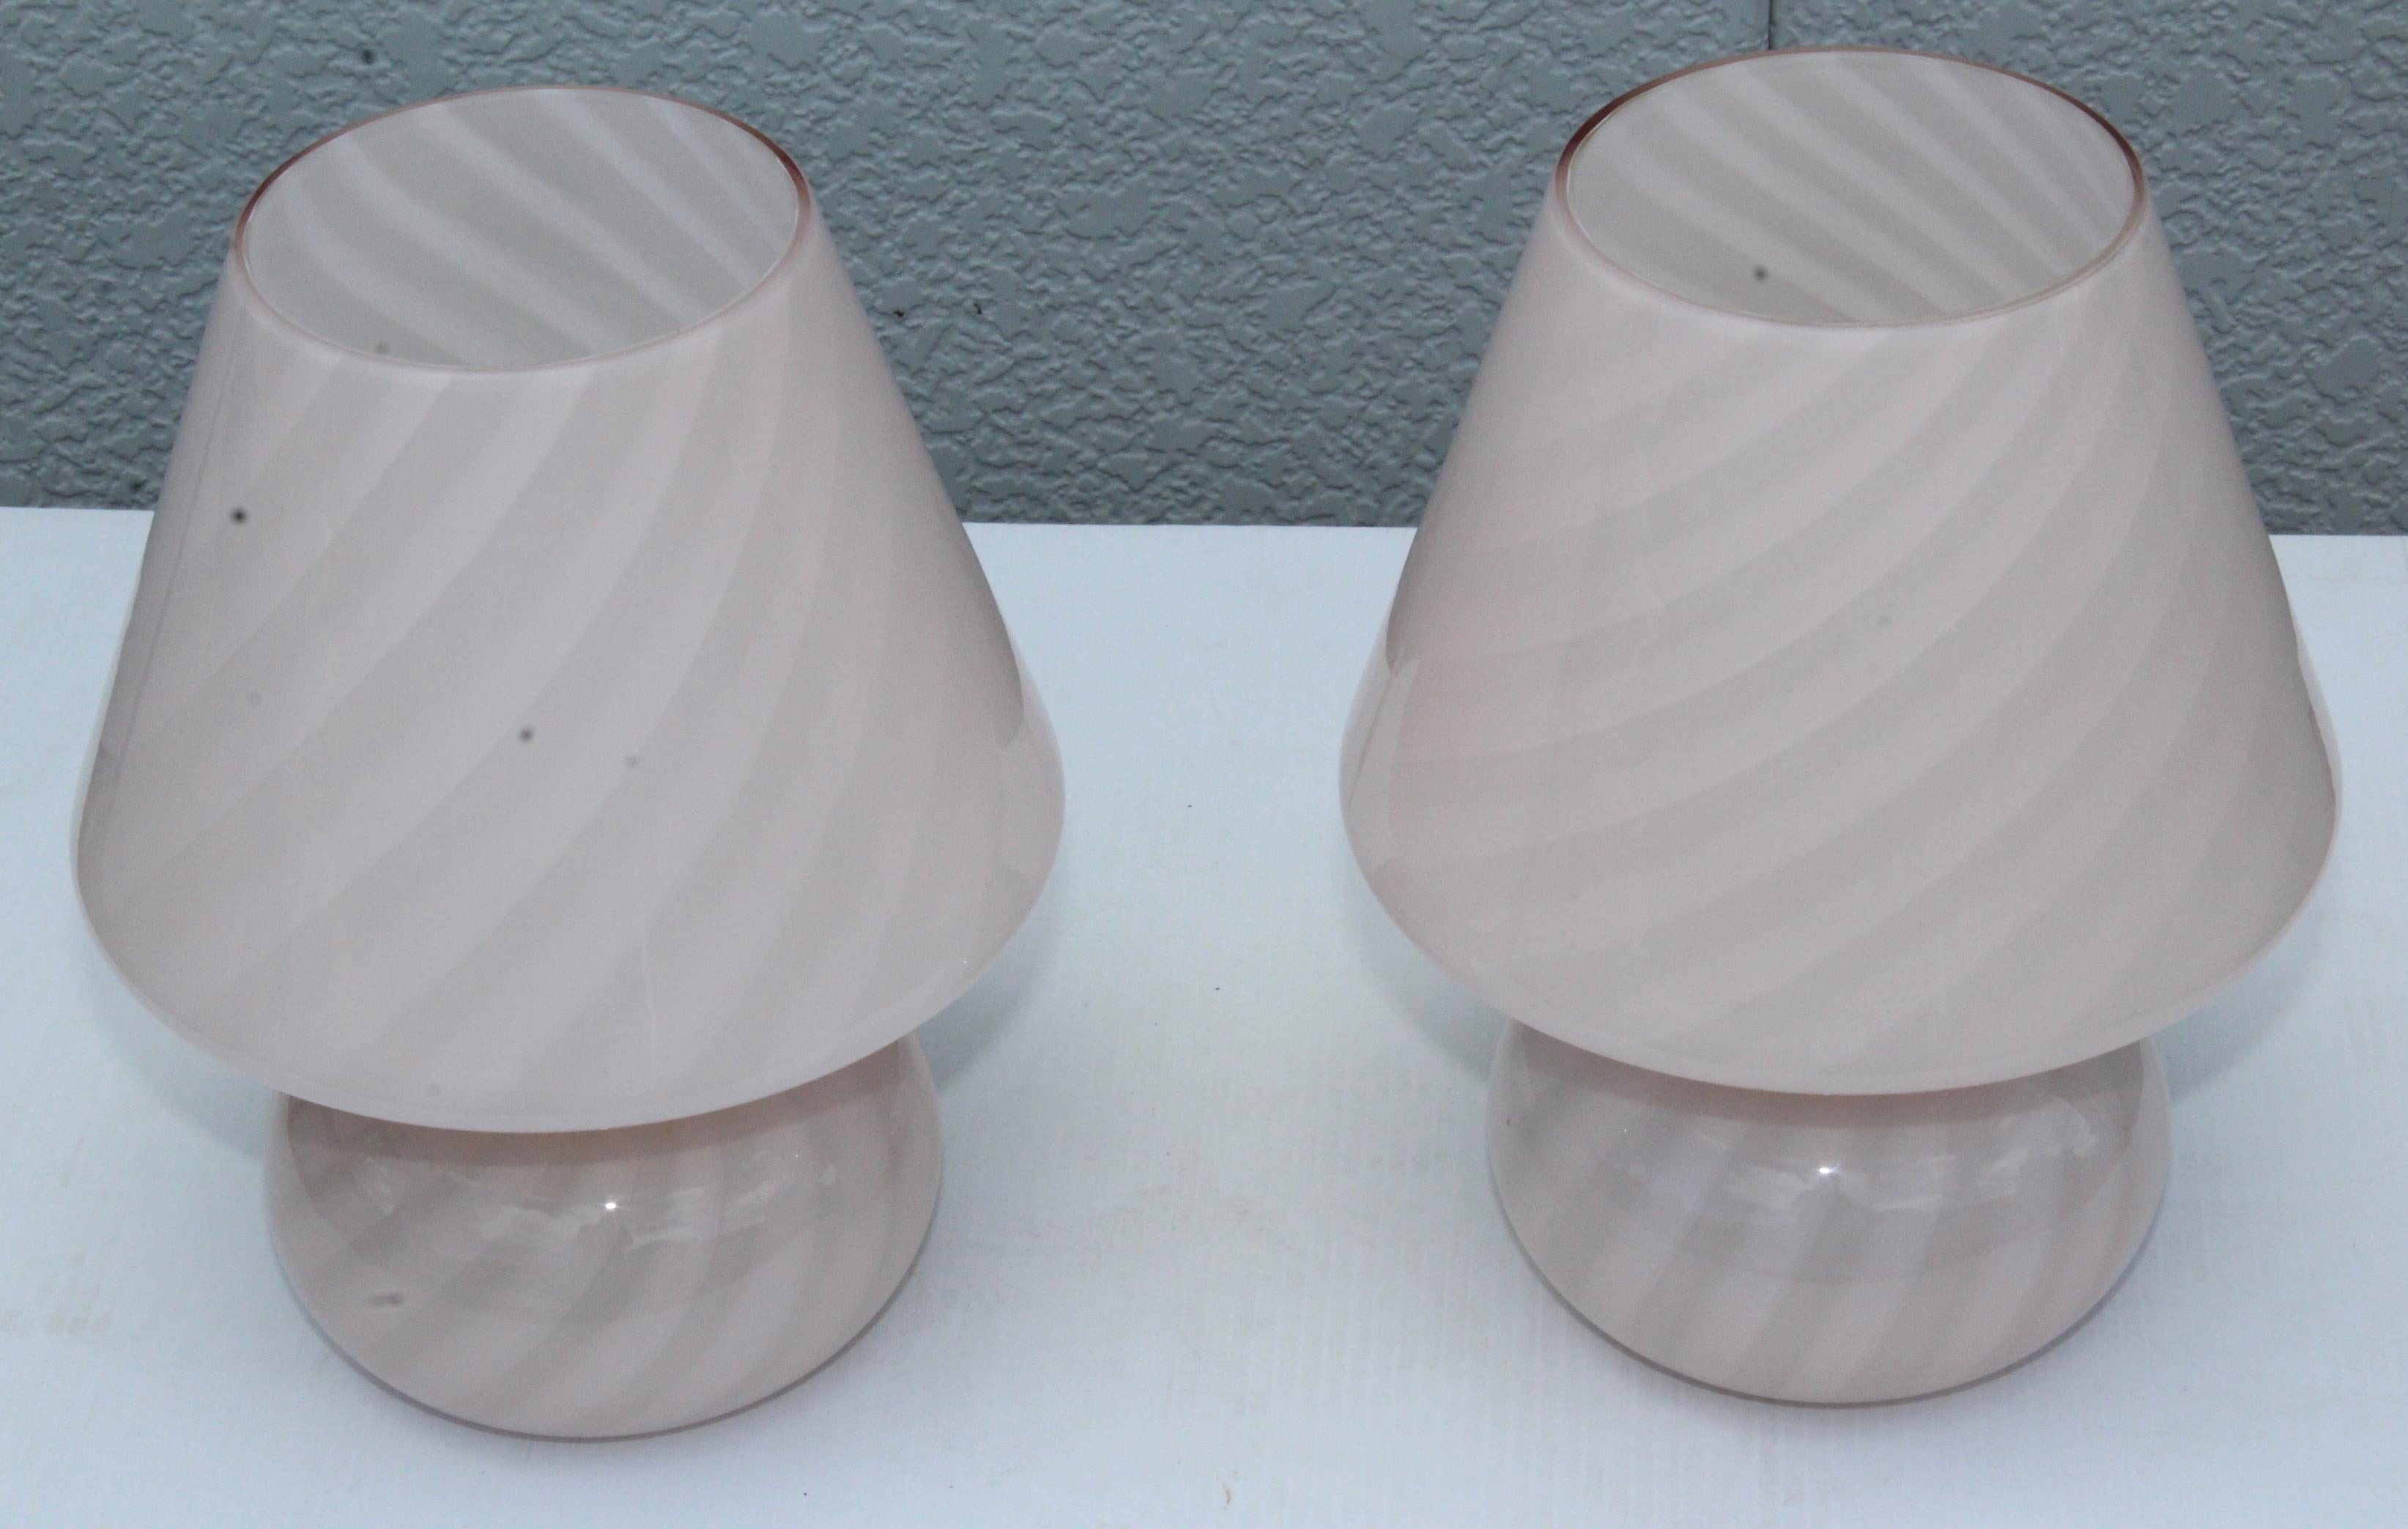 1970s Murano glass mushroom table lamps.